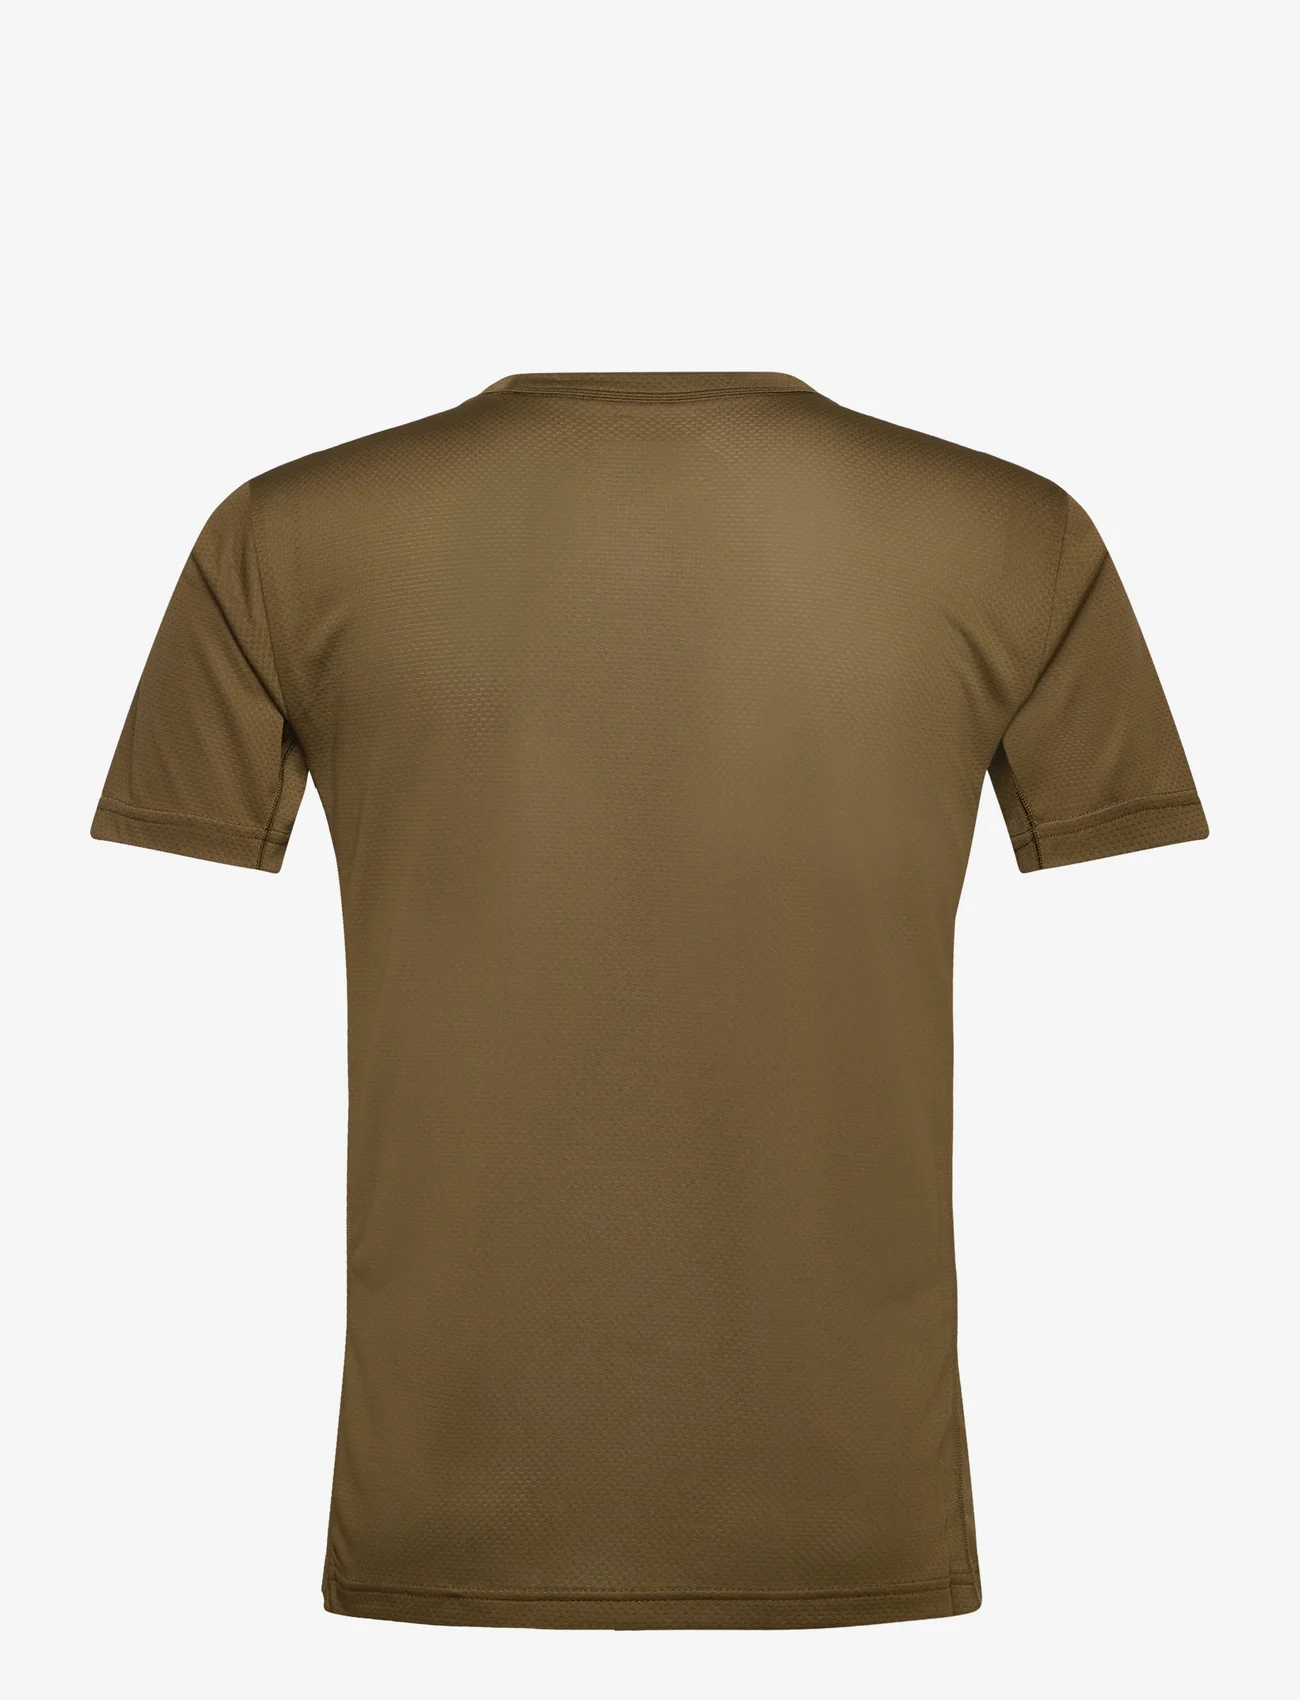 Champion - Crewneck T-Shirt - lowest prices - dark olive - 1